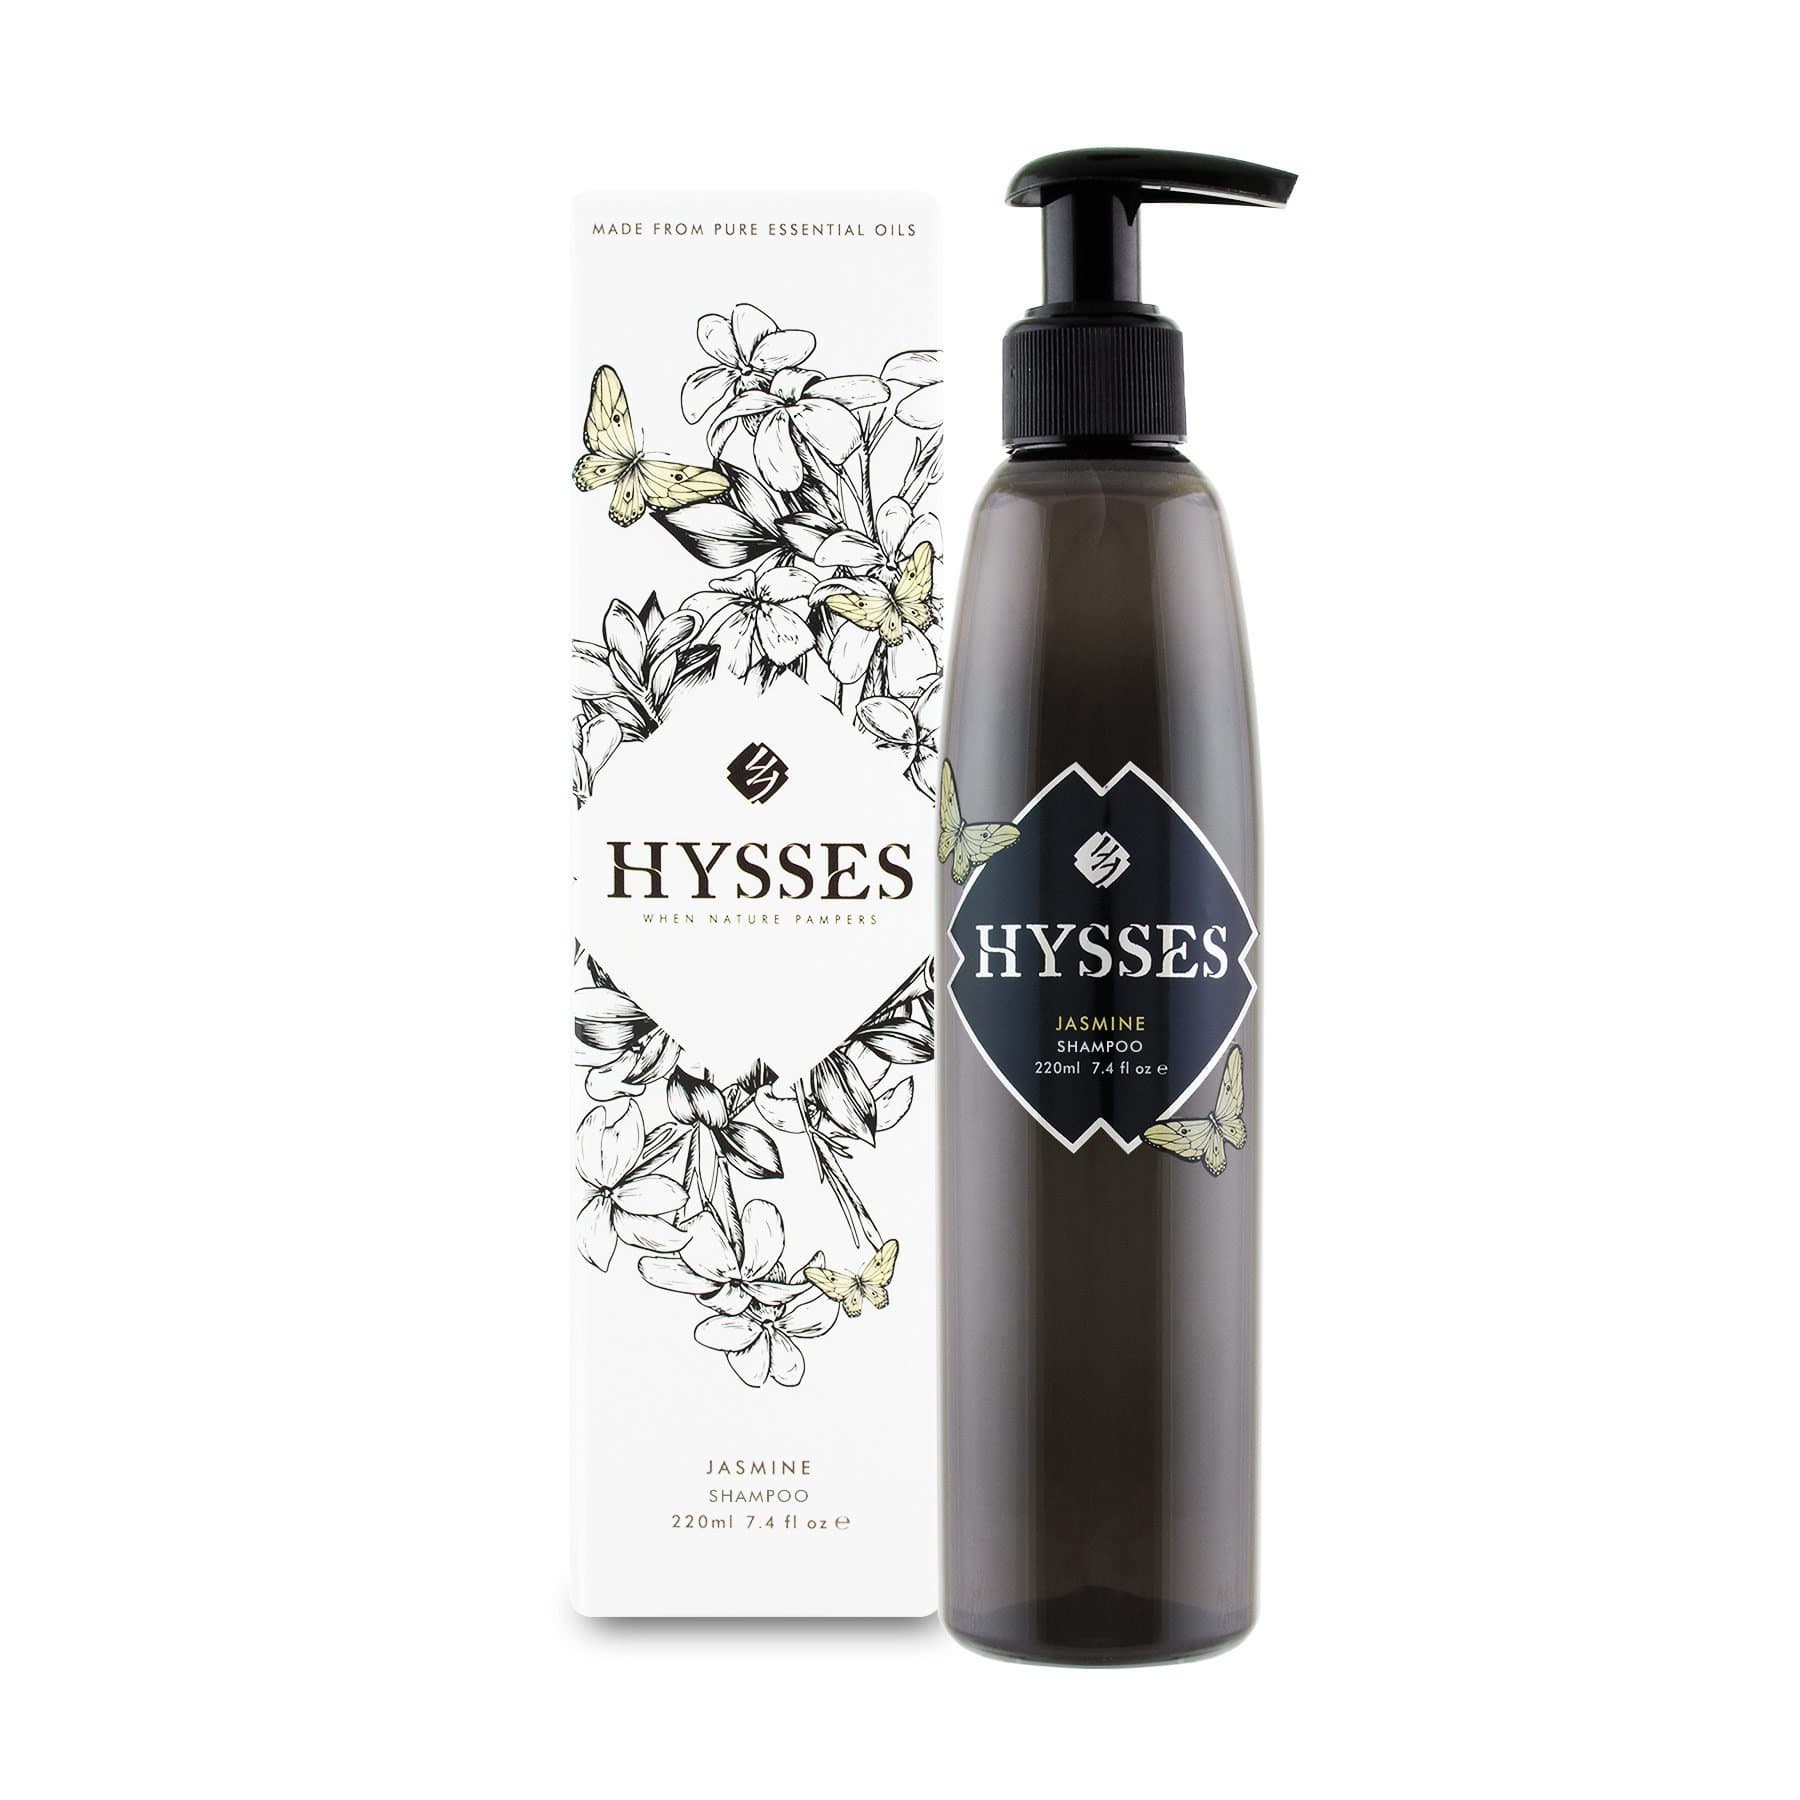 Hysses Hair Care Shampoo Jasmine, 220ml